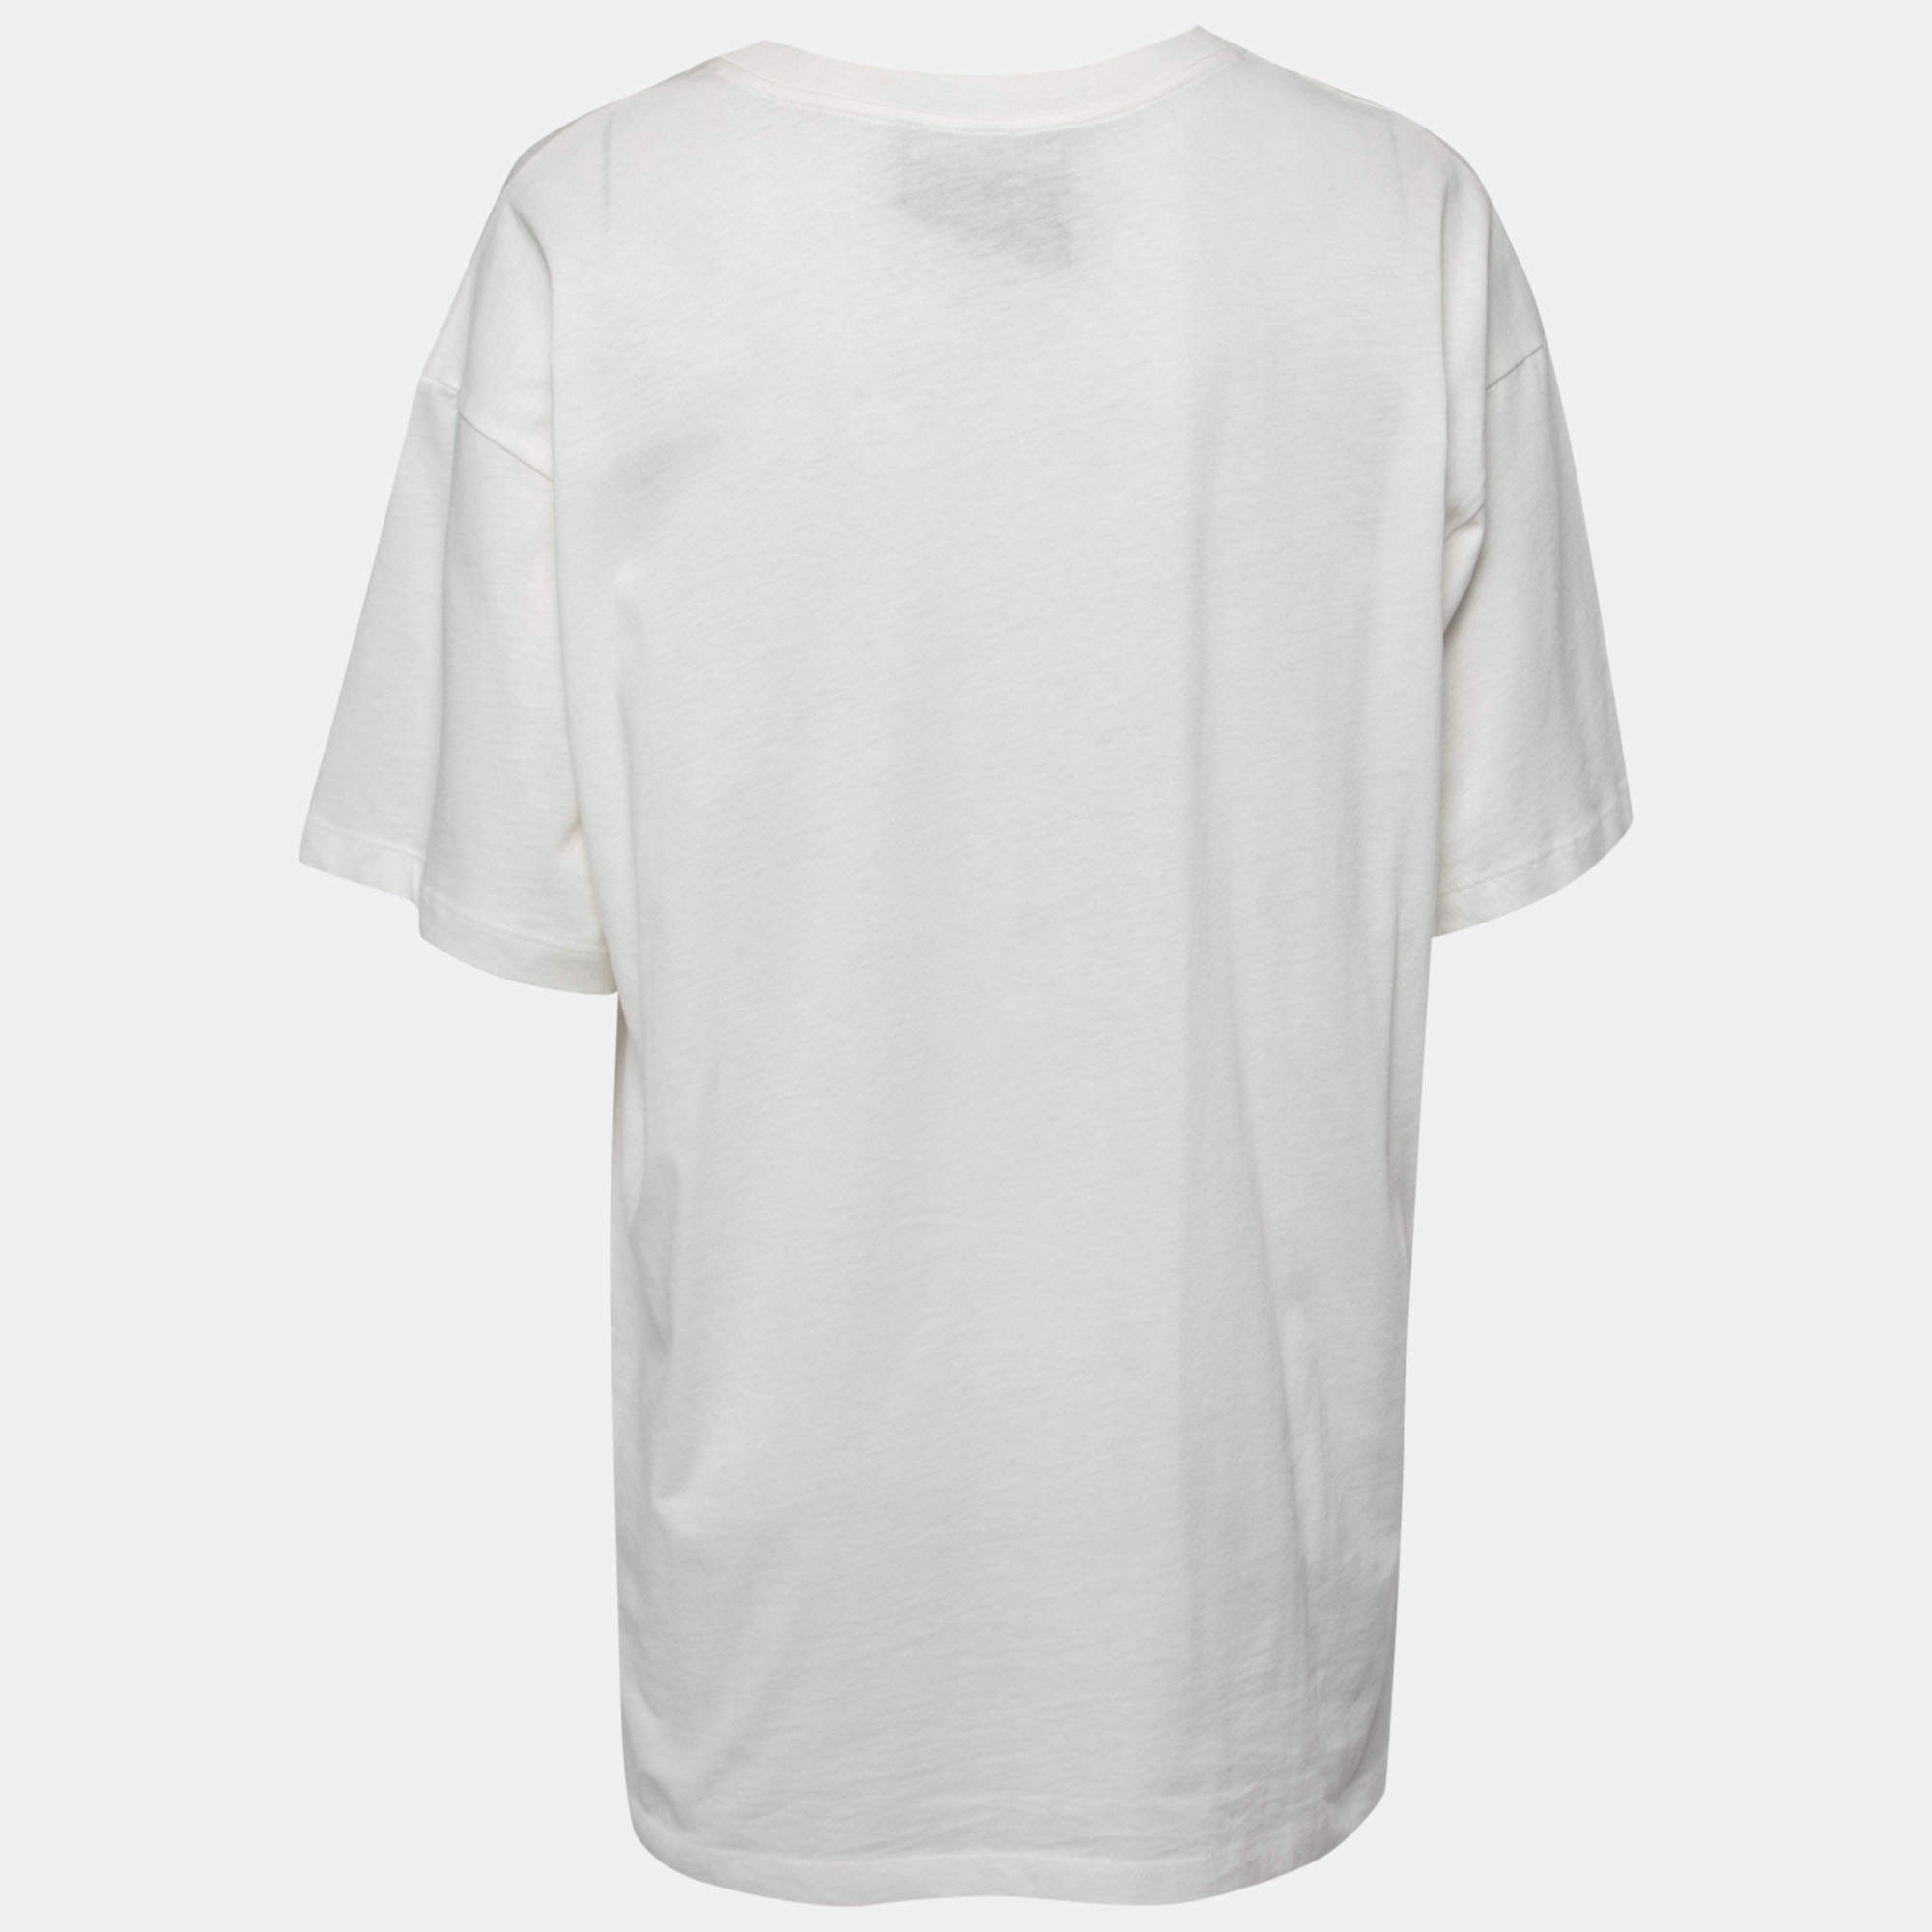 Moschino Teddy Bear pixel cotton jersey t-shirts tee shirts women oversize  tops dress white